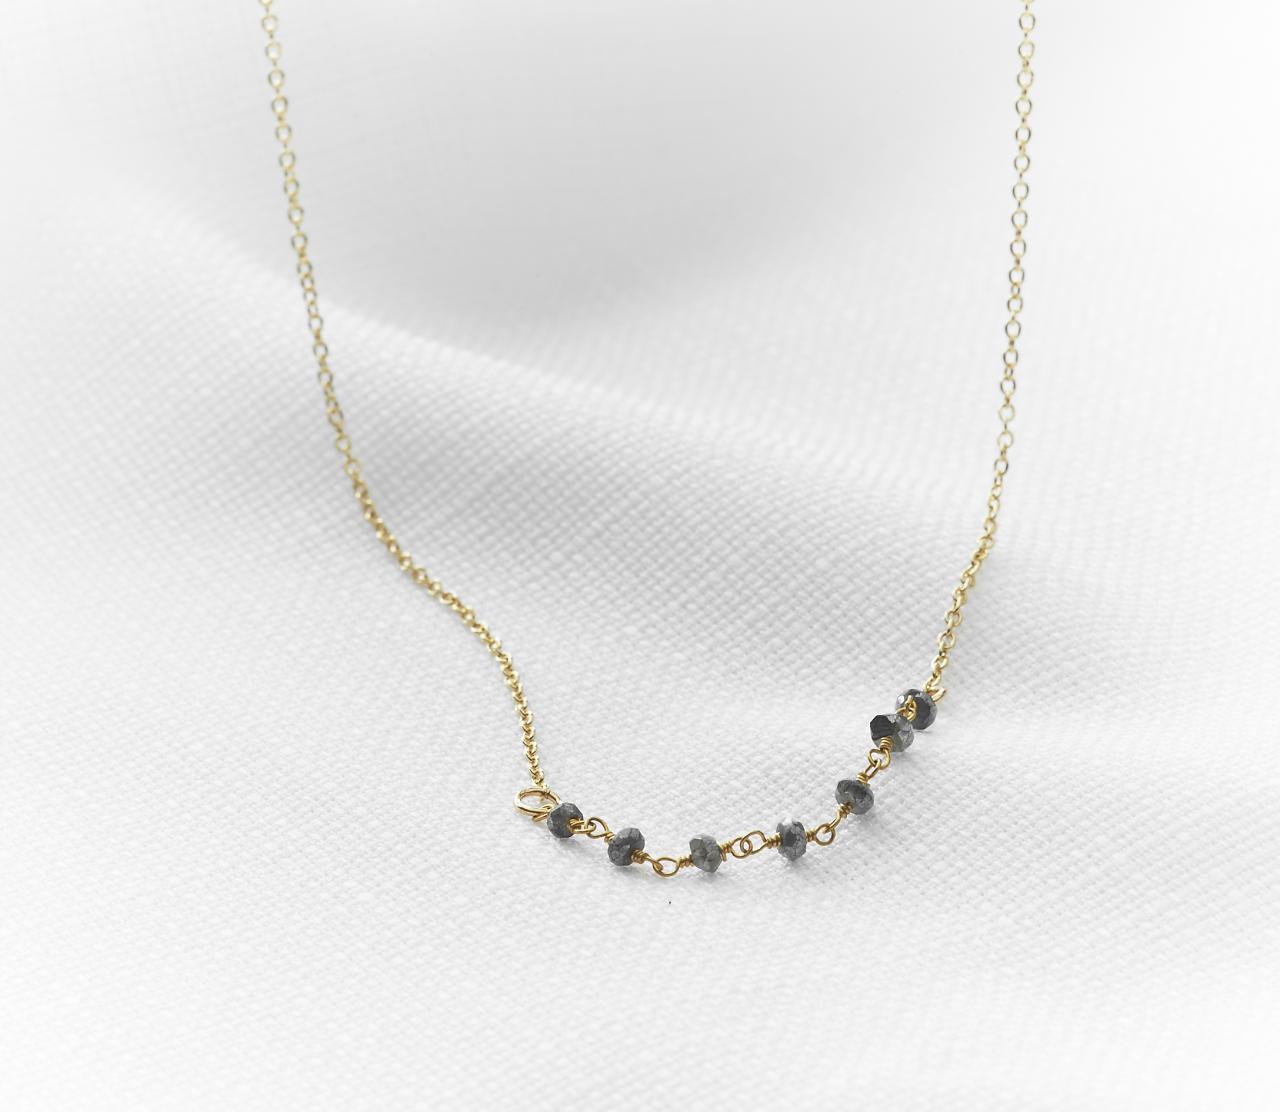 Gold Necklace, Labradorite Necklace, Gemstone Necklace, Layerd Gold Necklace, Bridesmaid Gift, Delicate Gold Necklace